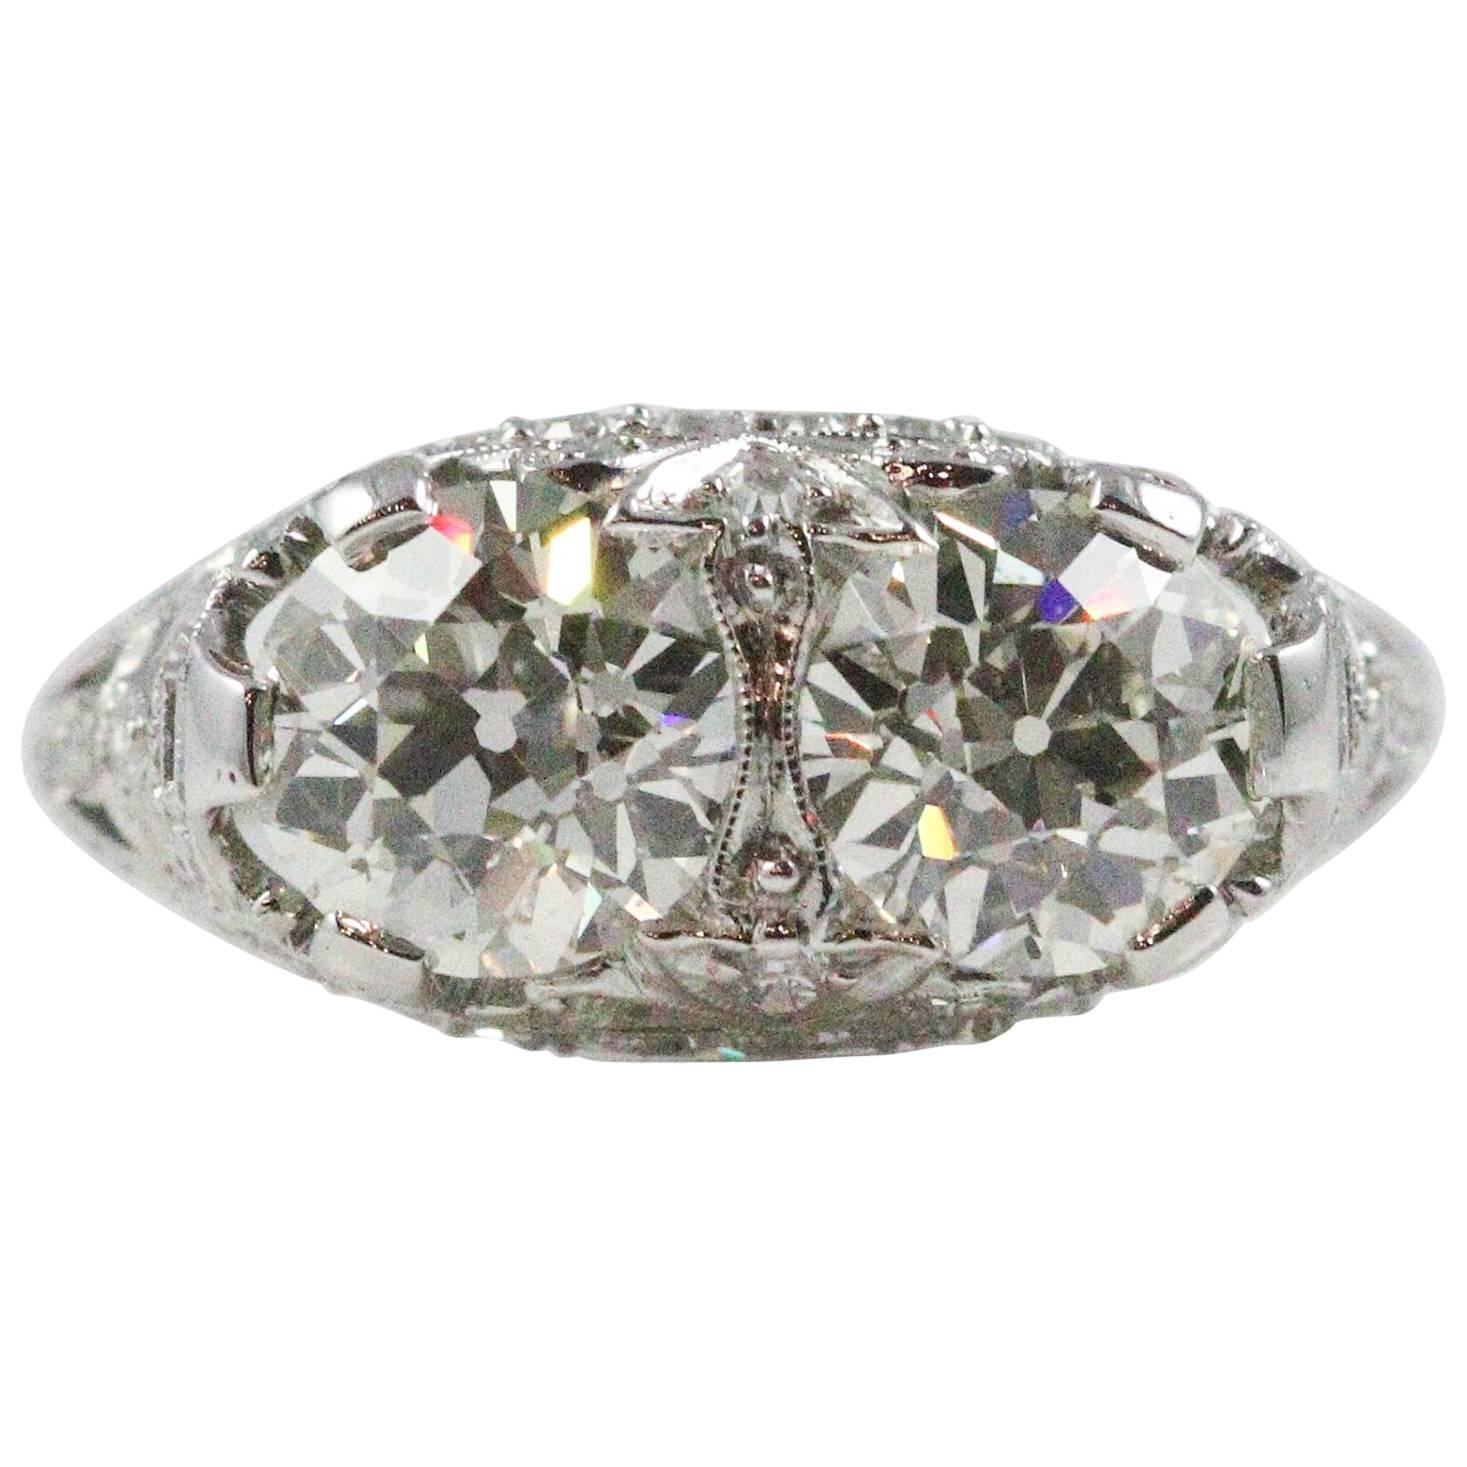 Elaborate Edwardian Double Stone European Cut Diamond Ring